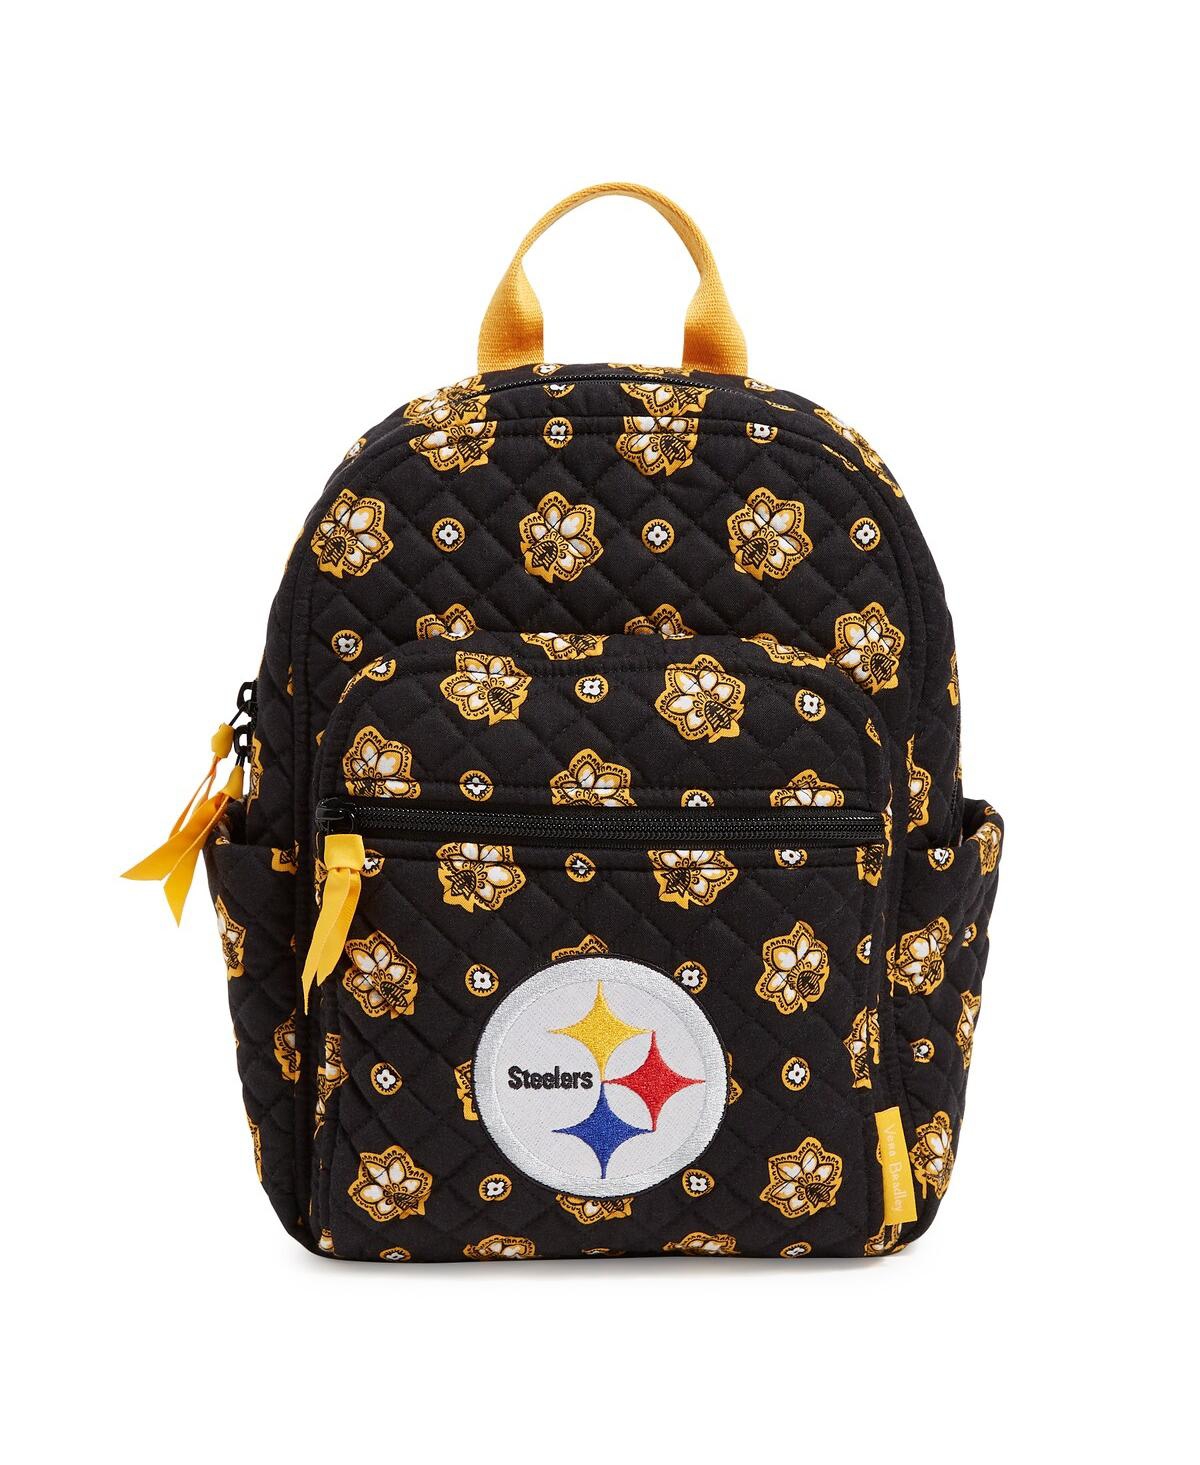 Men's and Women's Vera Bradley Pittsburgh Steelers Small Backpack - Black